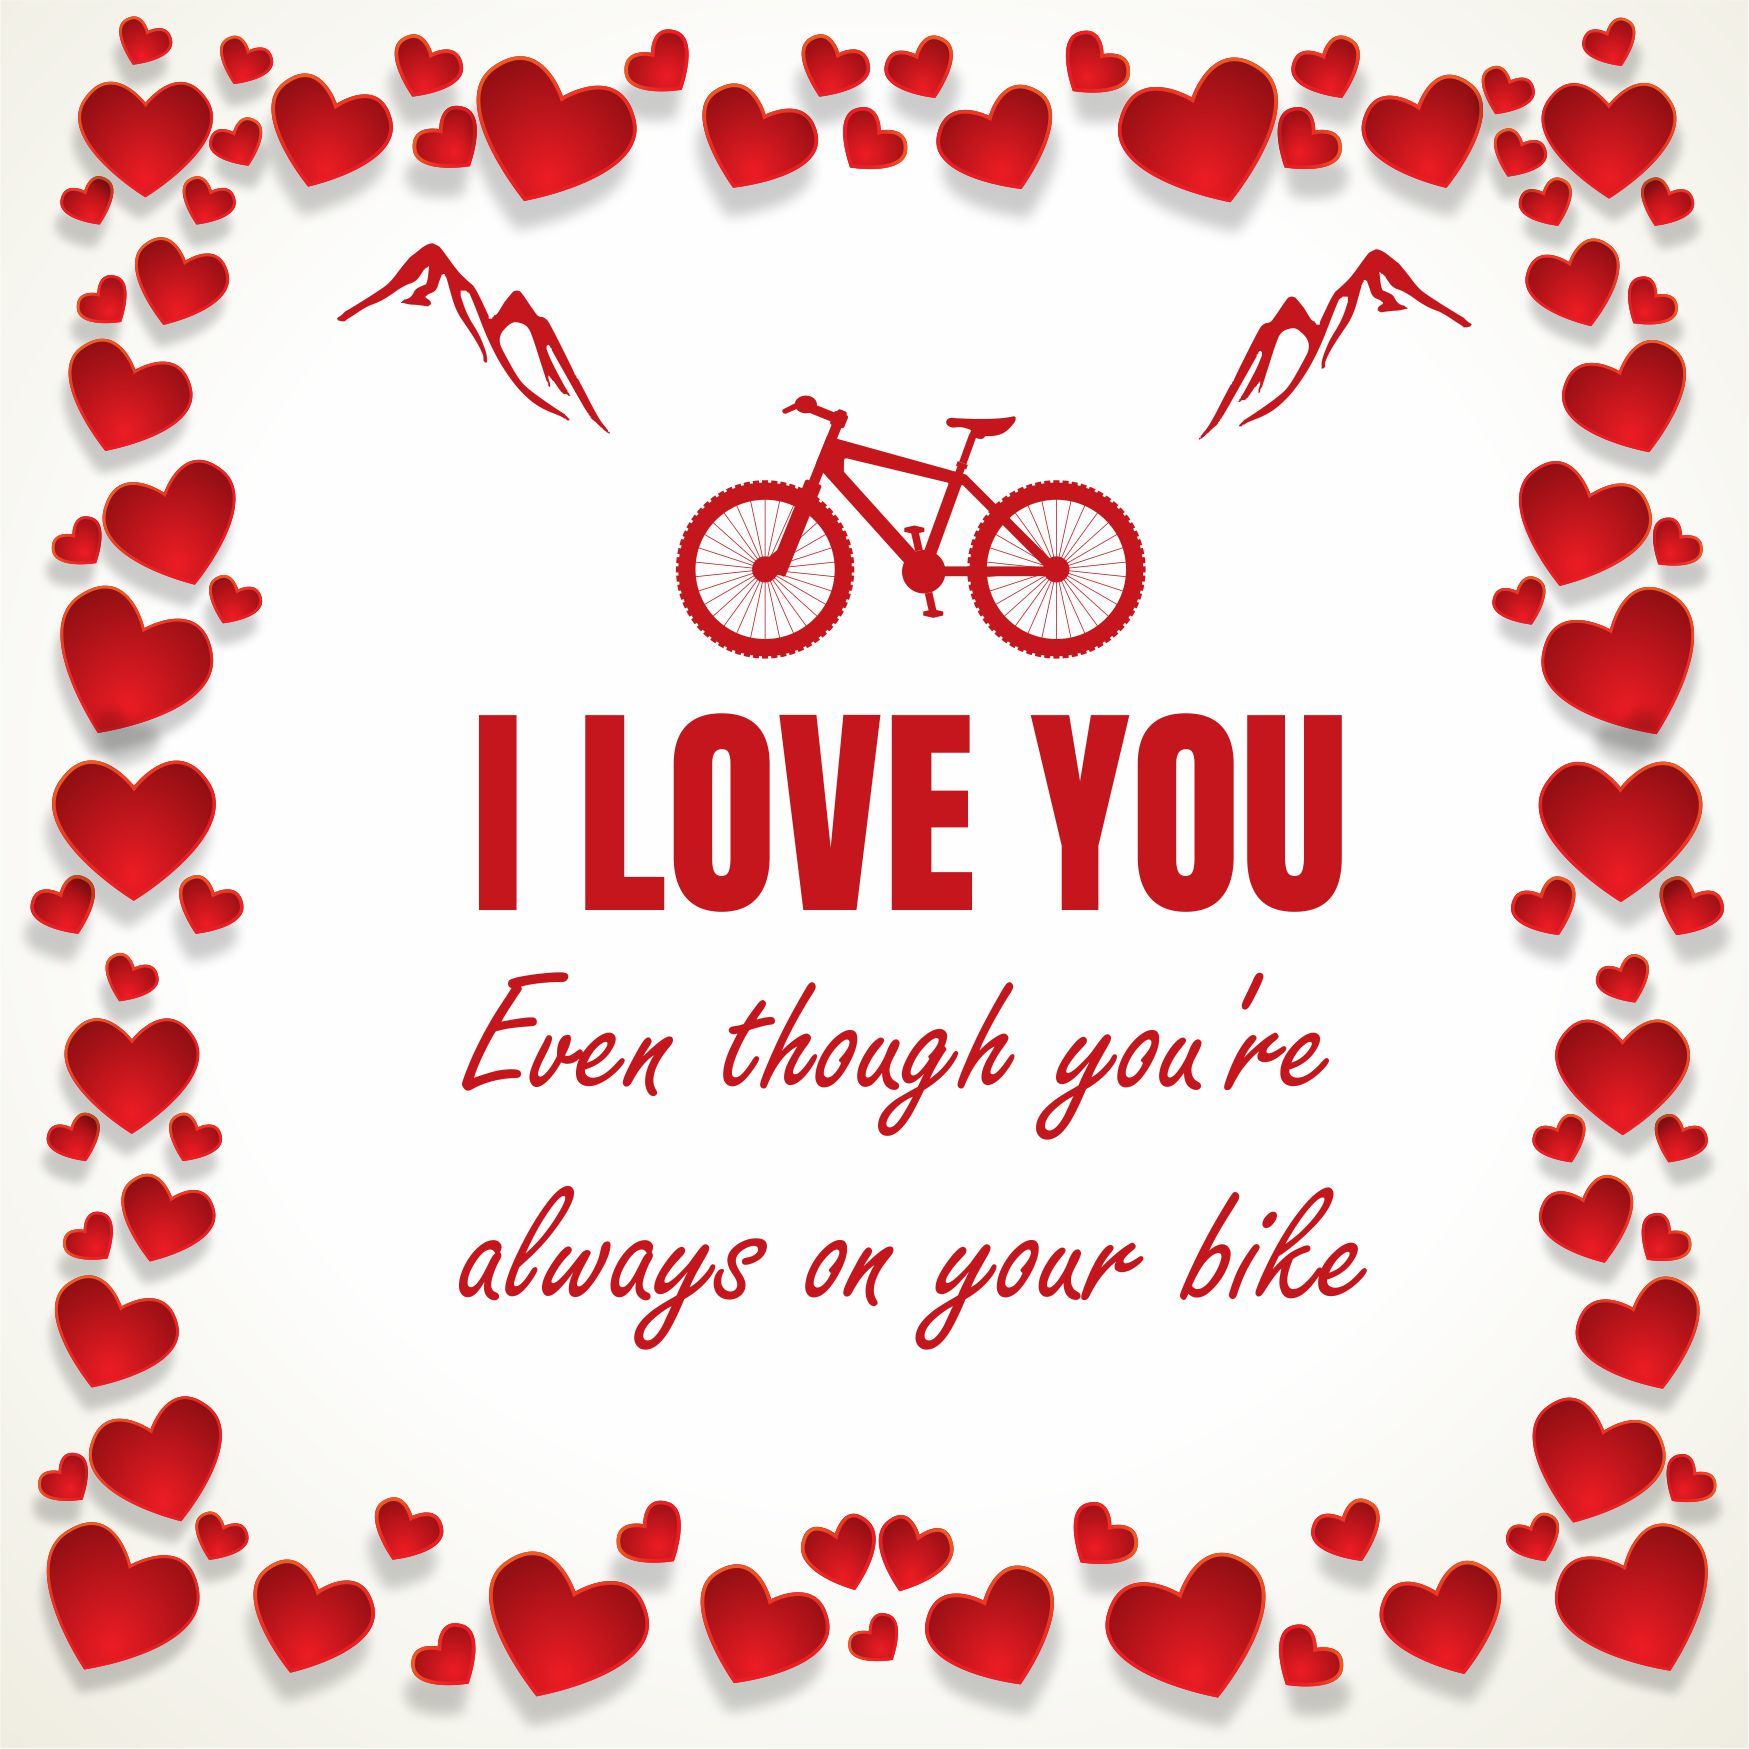 Tegeltje leuk als Valentijnscadeau voor mtb'ers leuk lief I love you  Even Though you're always on your bike